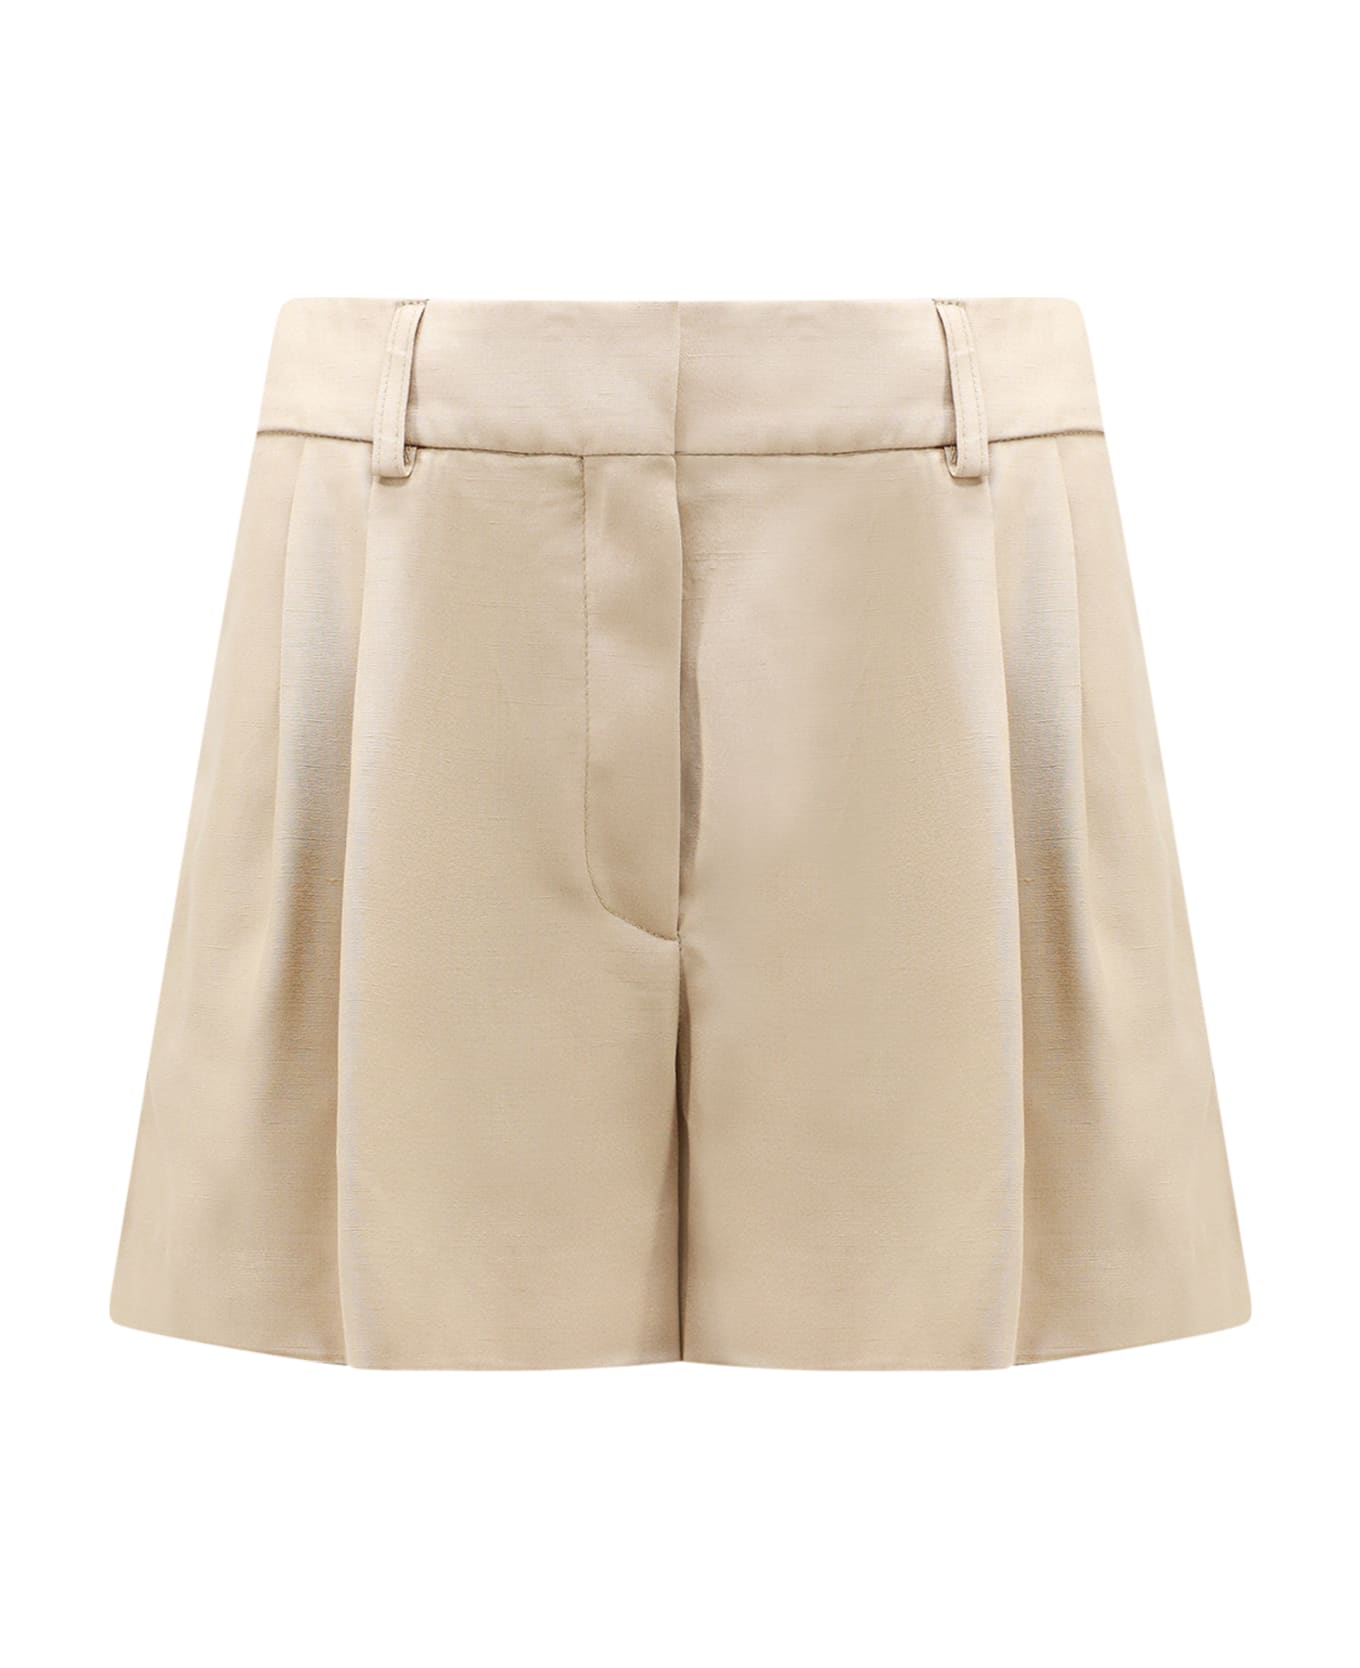 Stella McCartney Tailored Shorts - Beige ショートパンツ